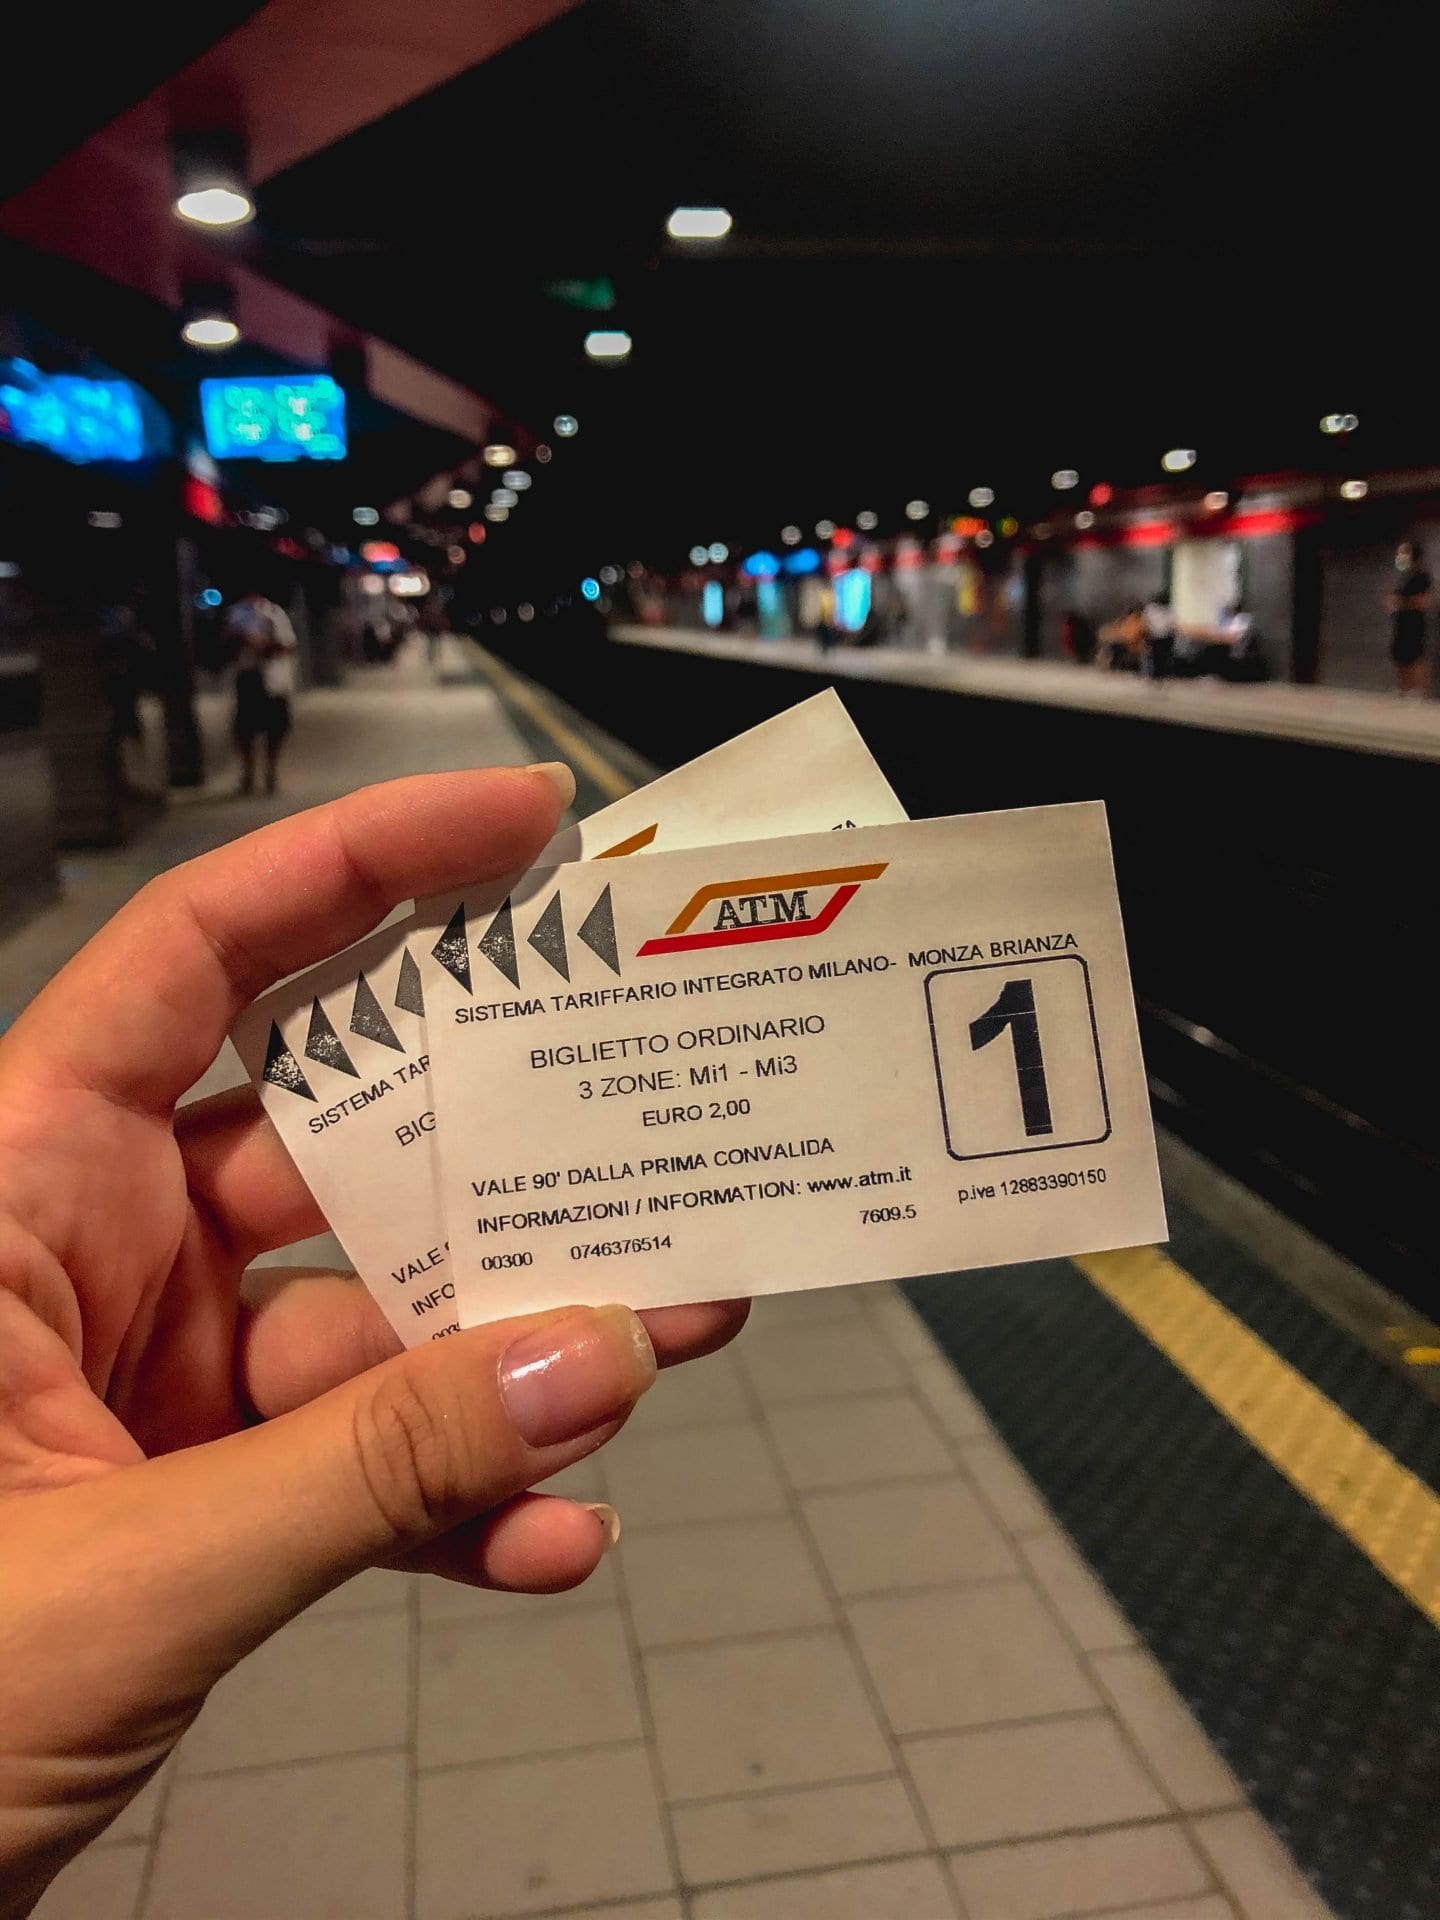 milan train travel card